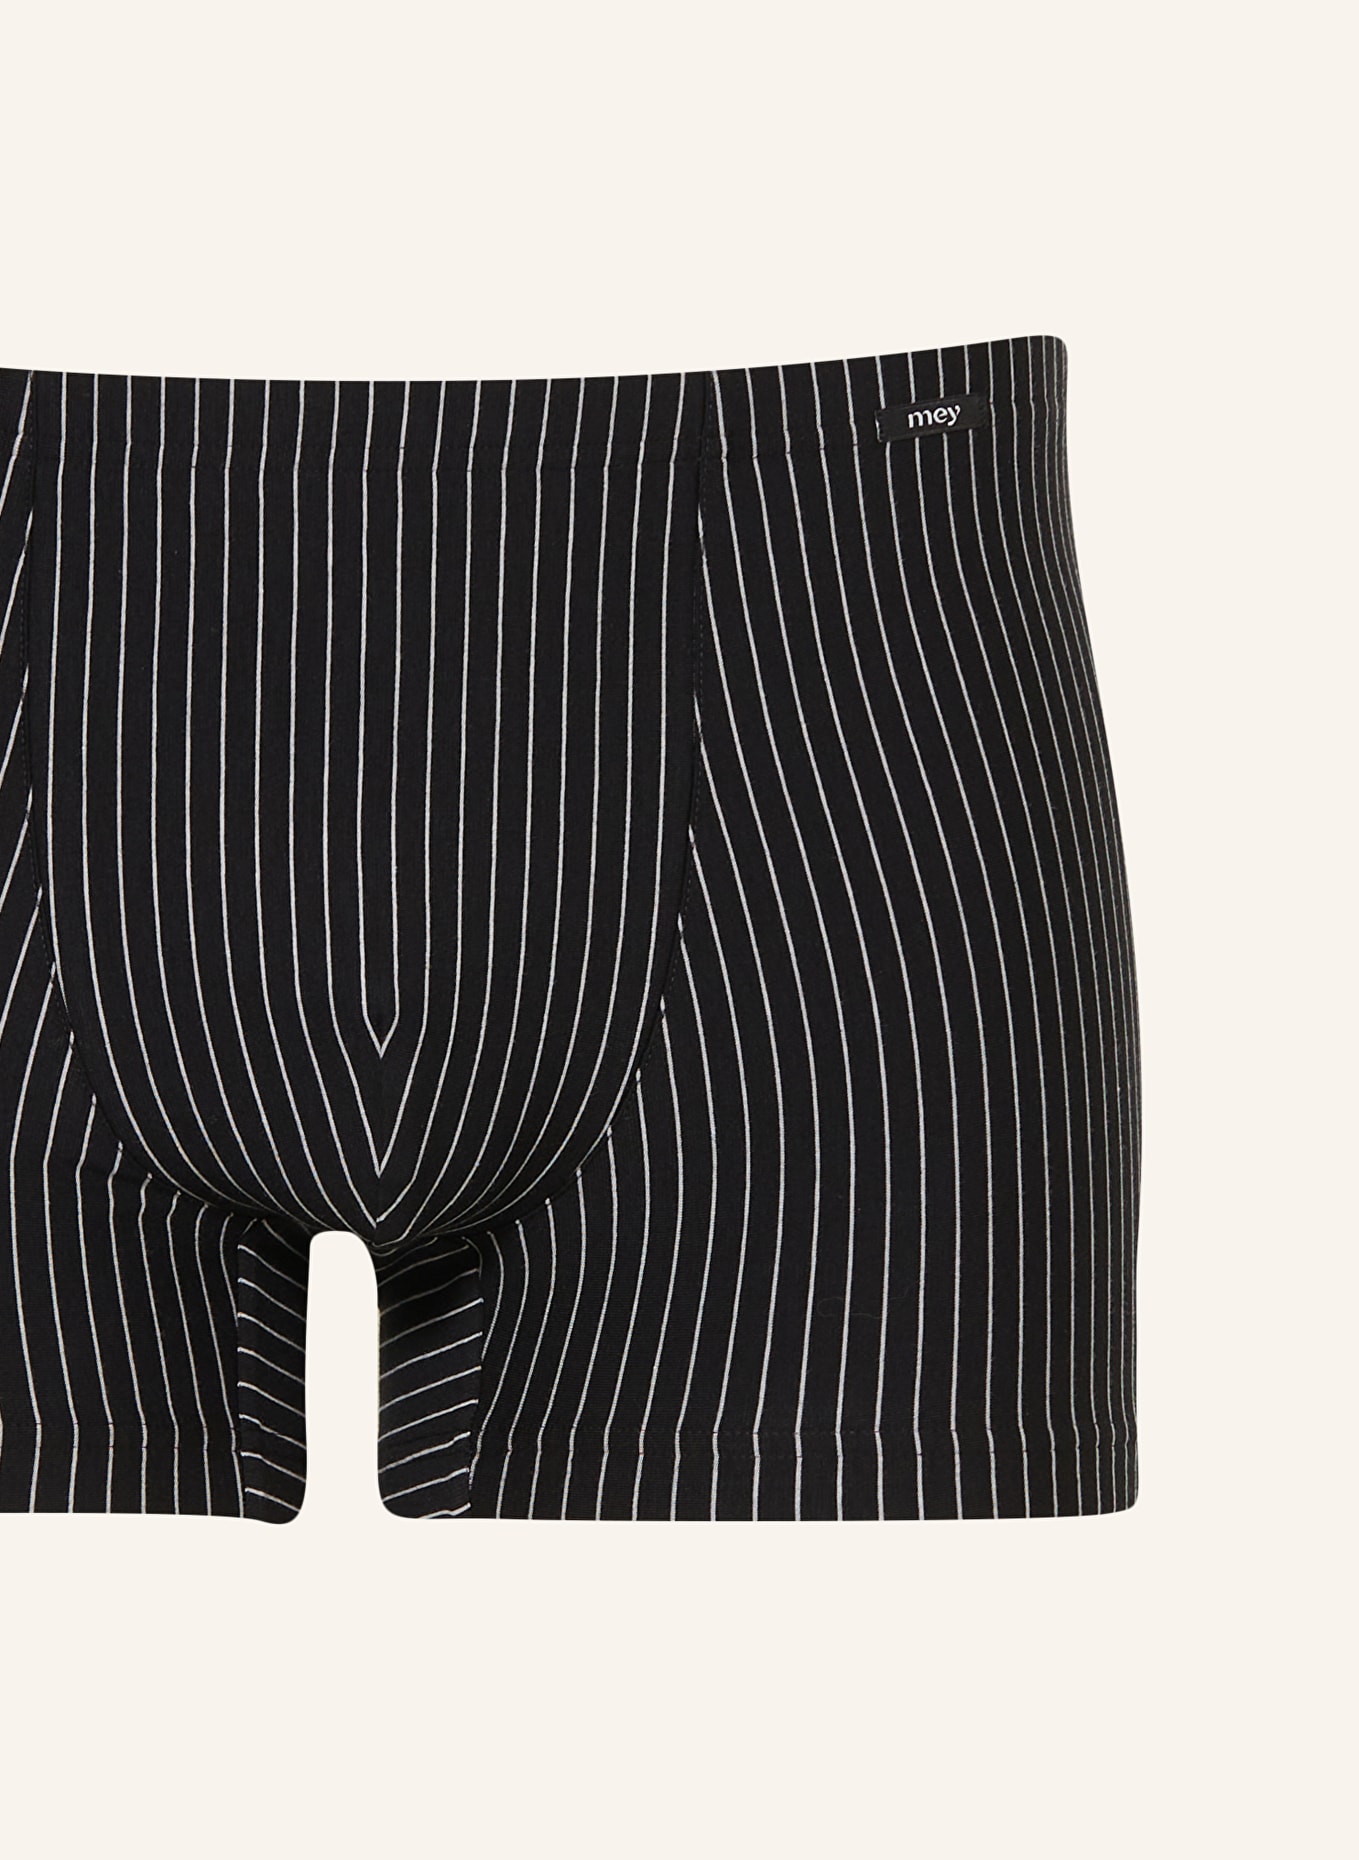 mey Boxer shorts series BC STRIPES, Color: BLACK/ WHITE (Image 3)